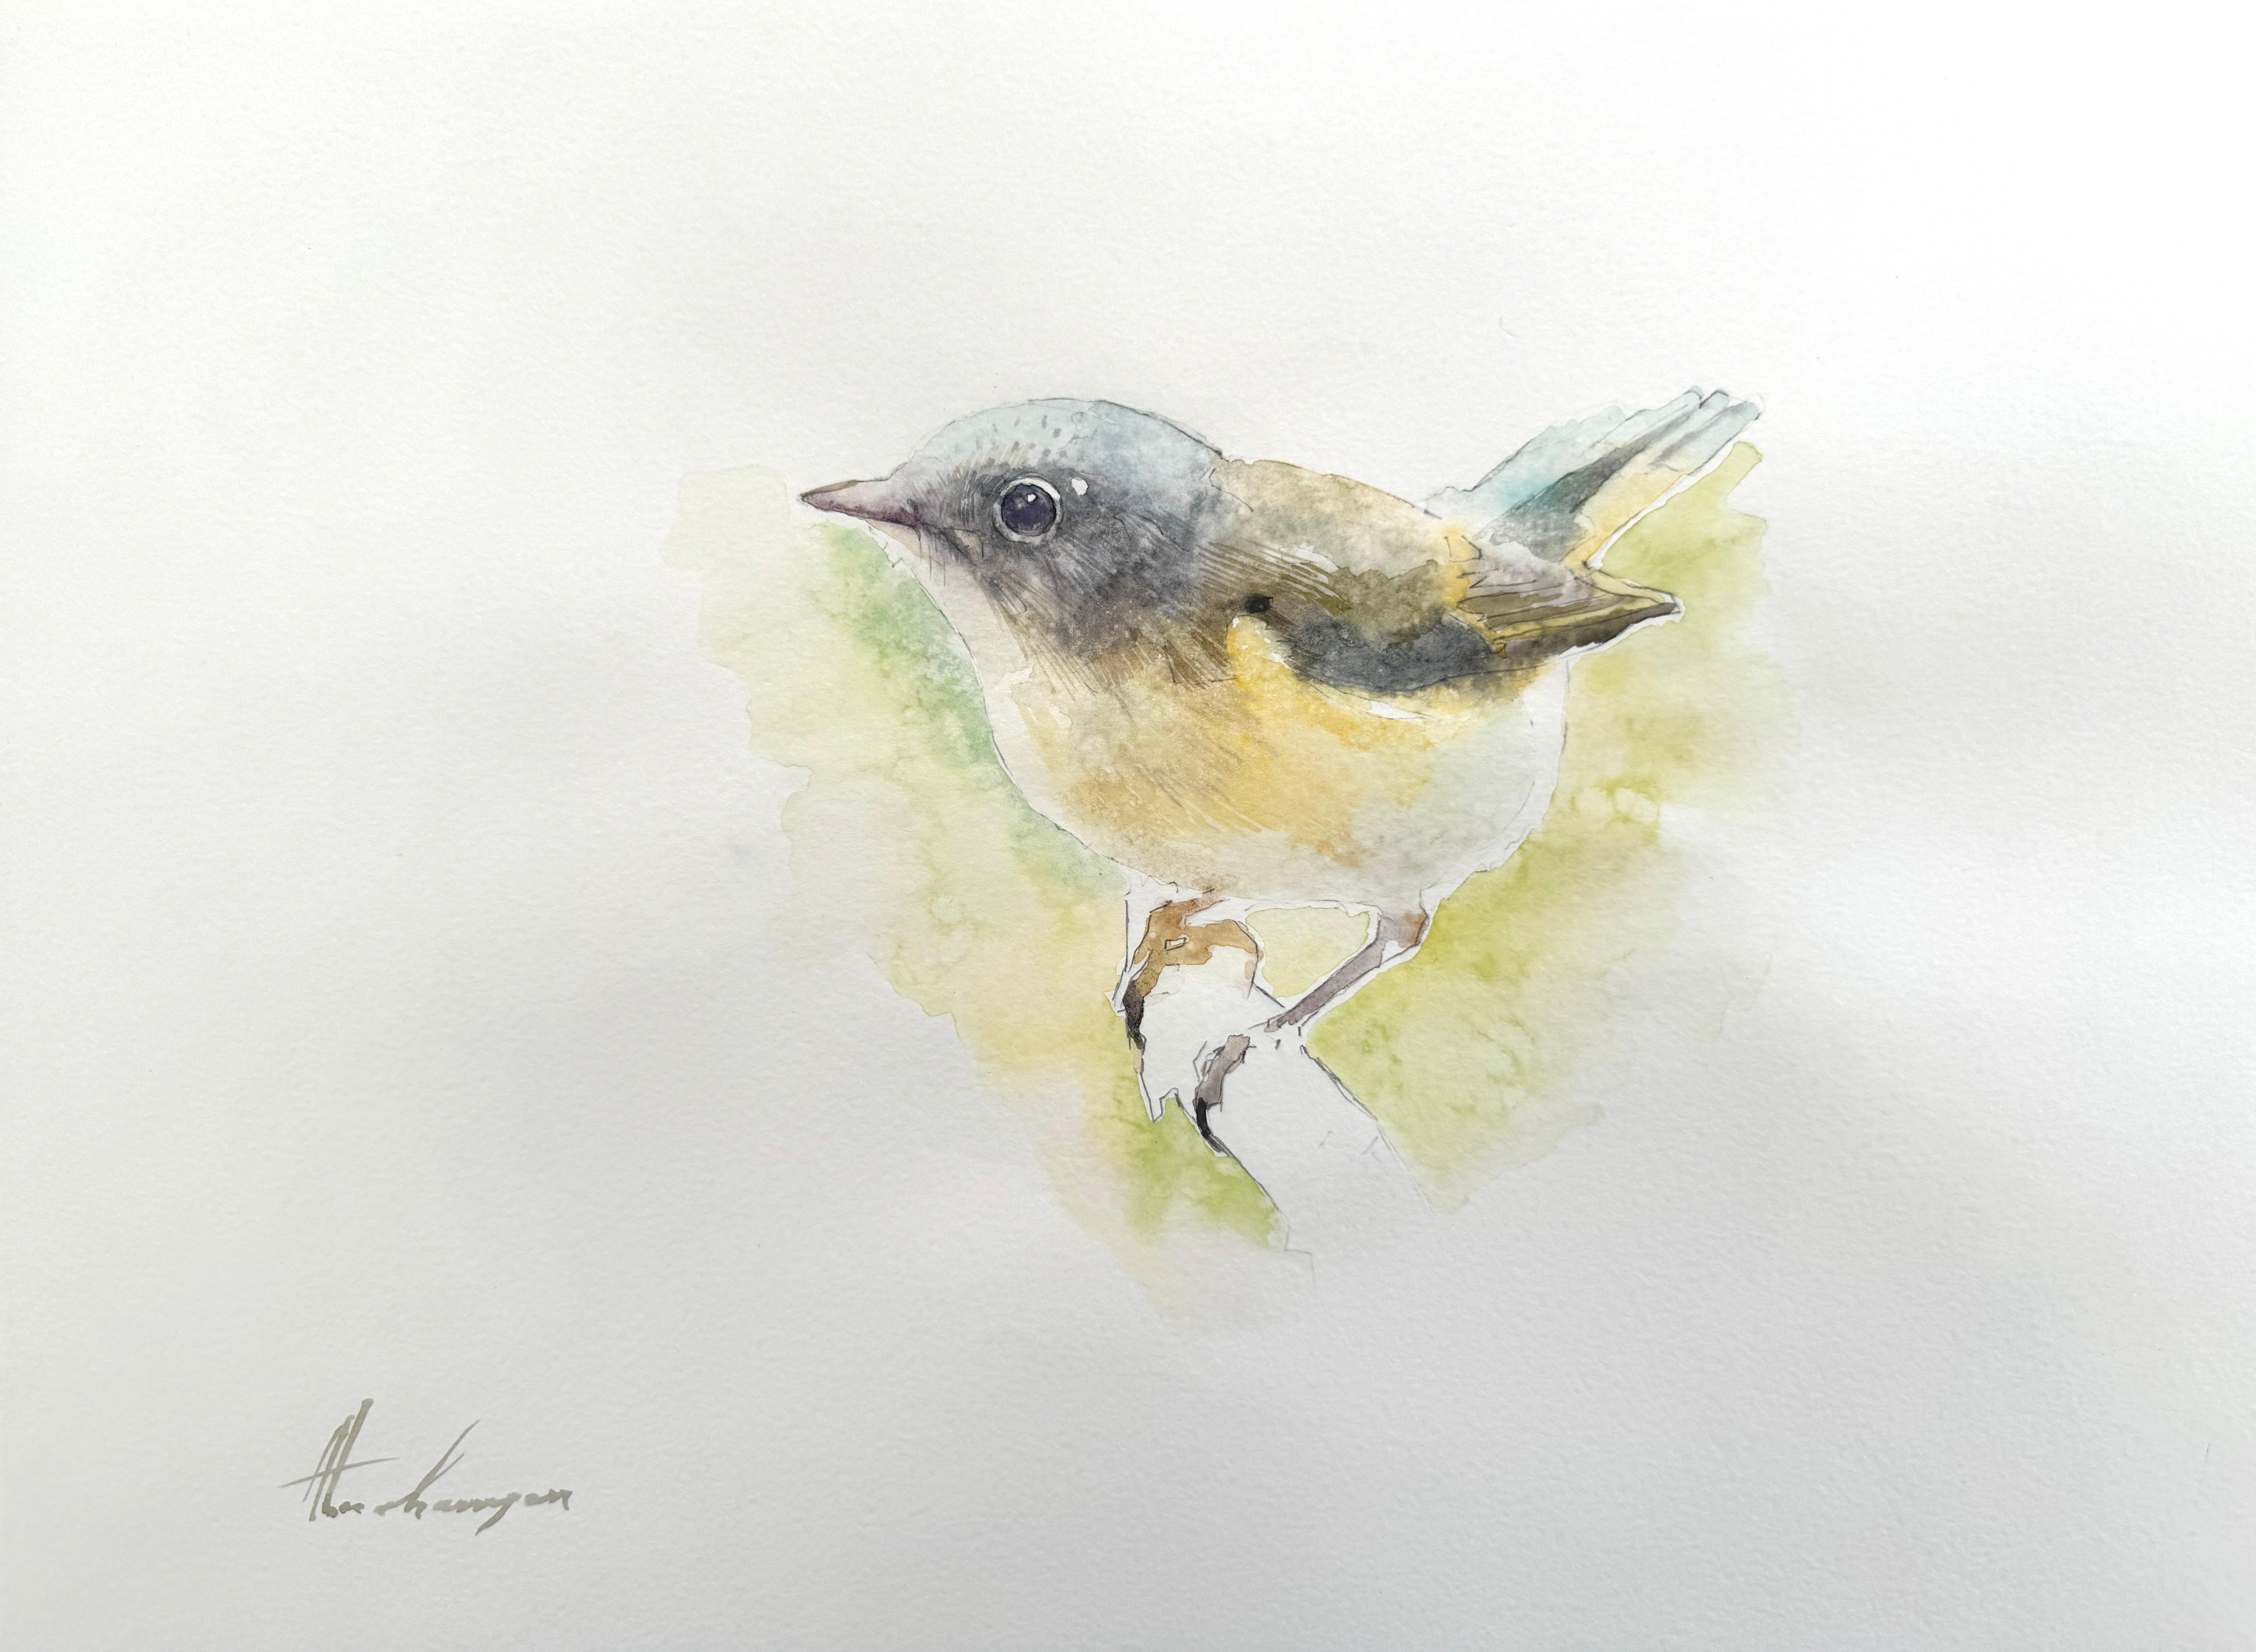 Artyom Abrahamyan Animal Art - American Redstart, Bird, Watercolor on Paper, Handmade Painting, One of a Kind